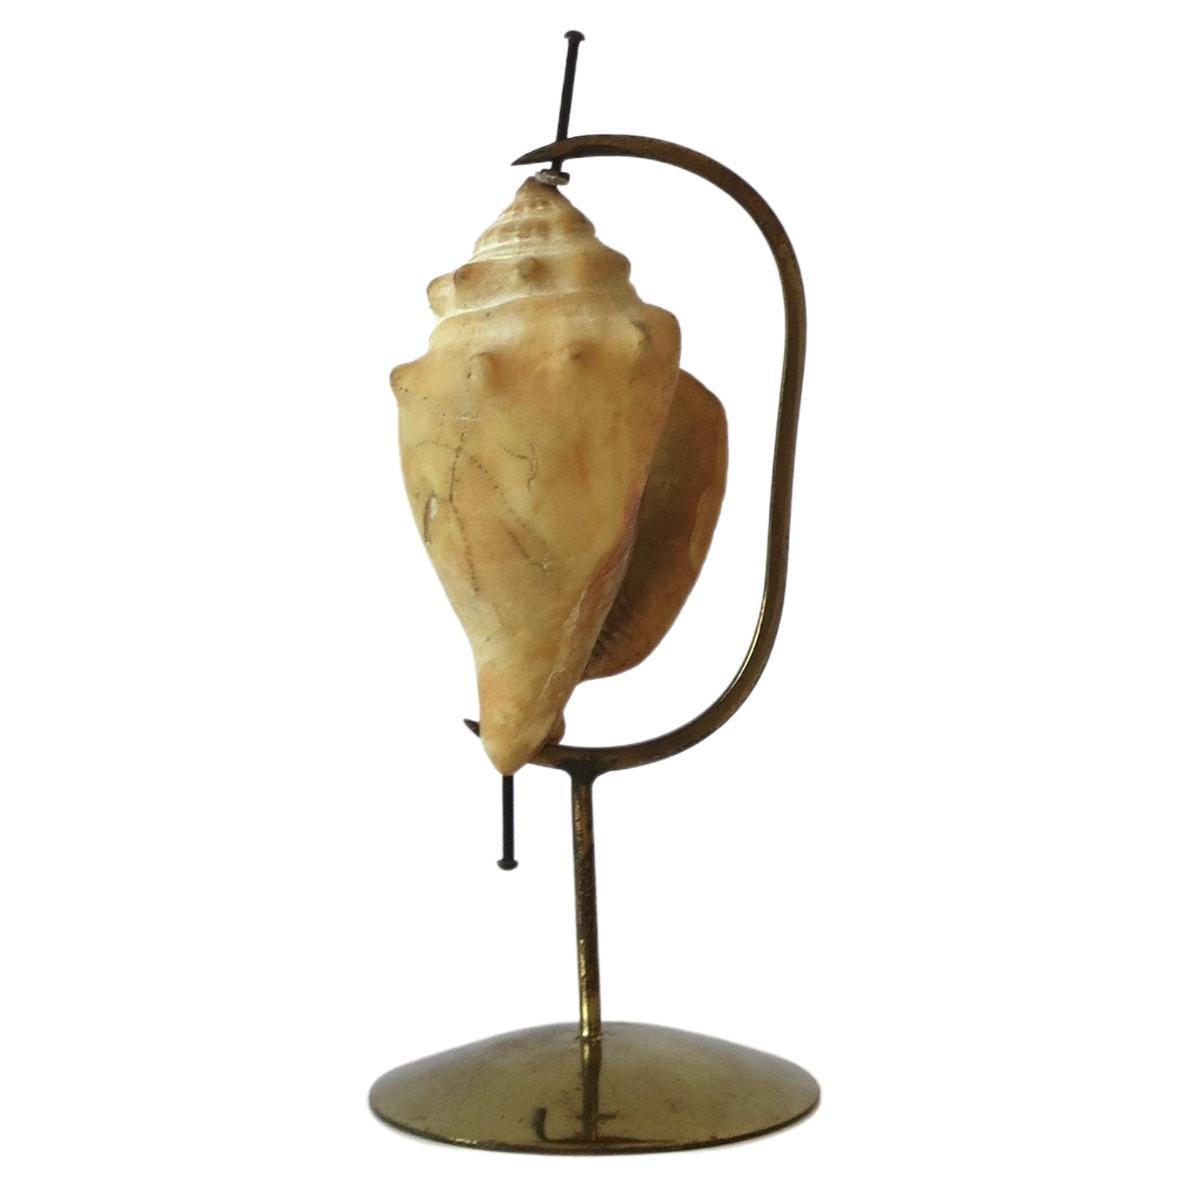 Marguerite Stix Designed Natural Seashell and Brass Object, circa 1960s